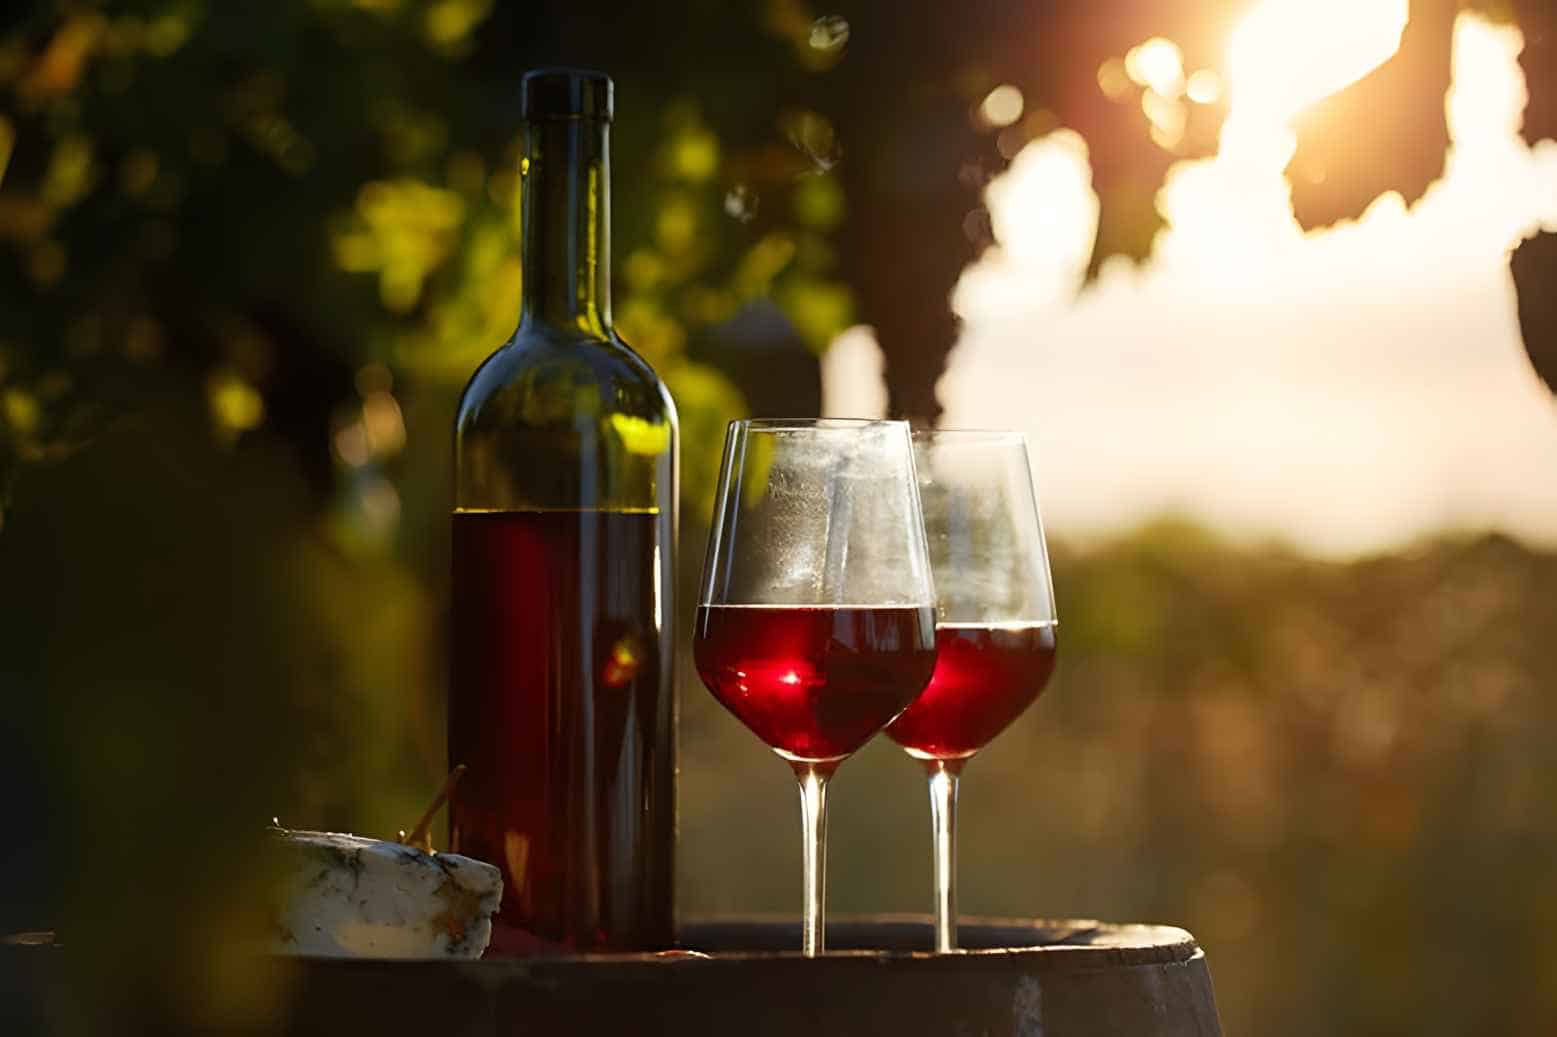 History of Carmenere Wine